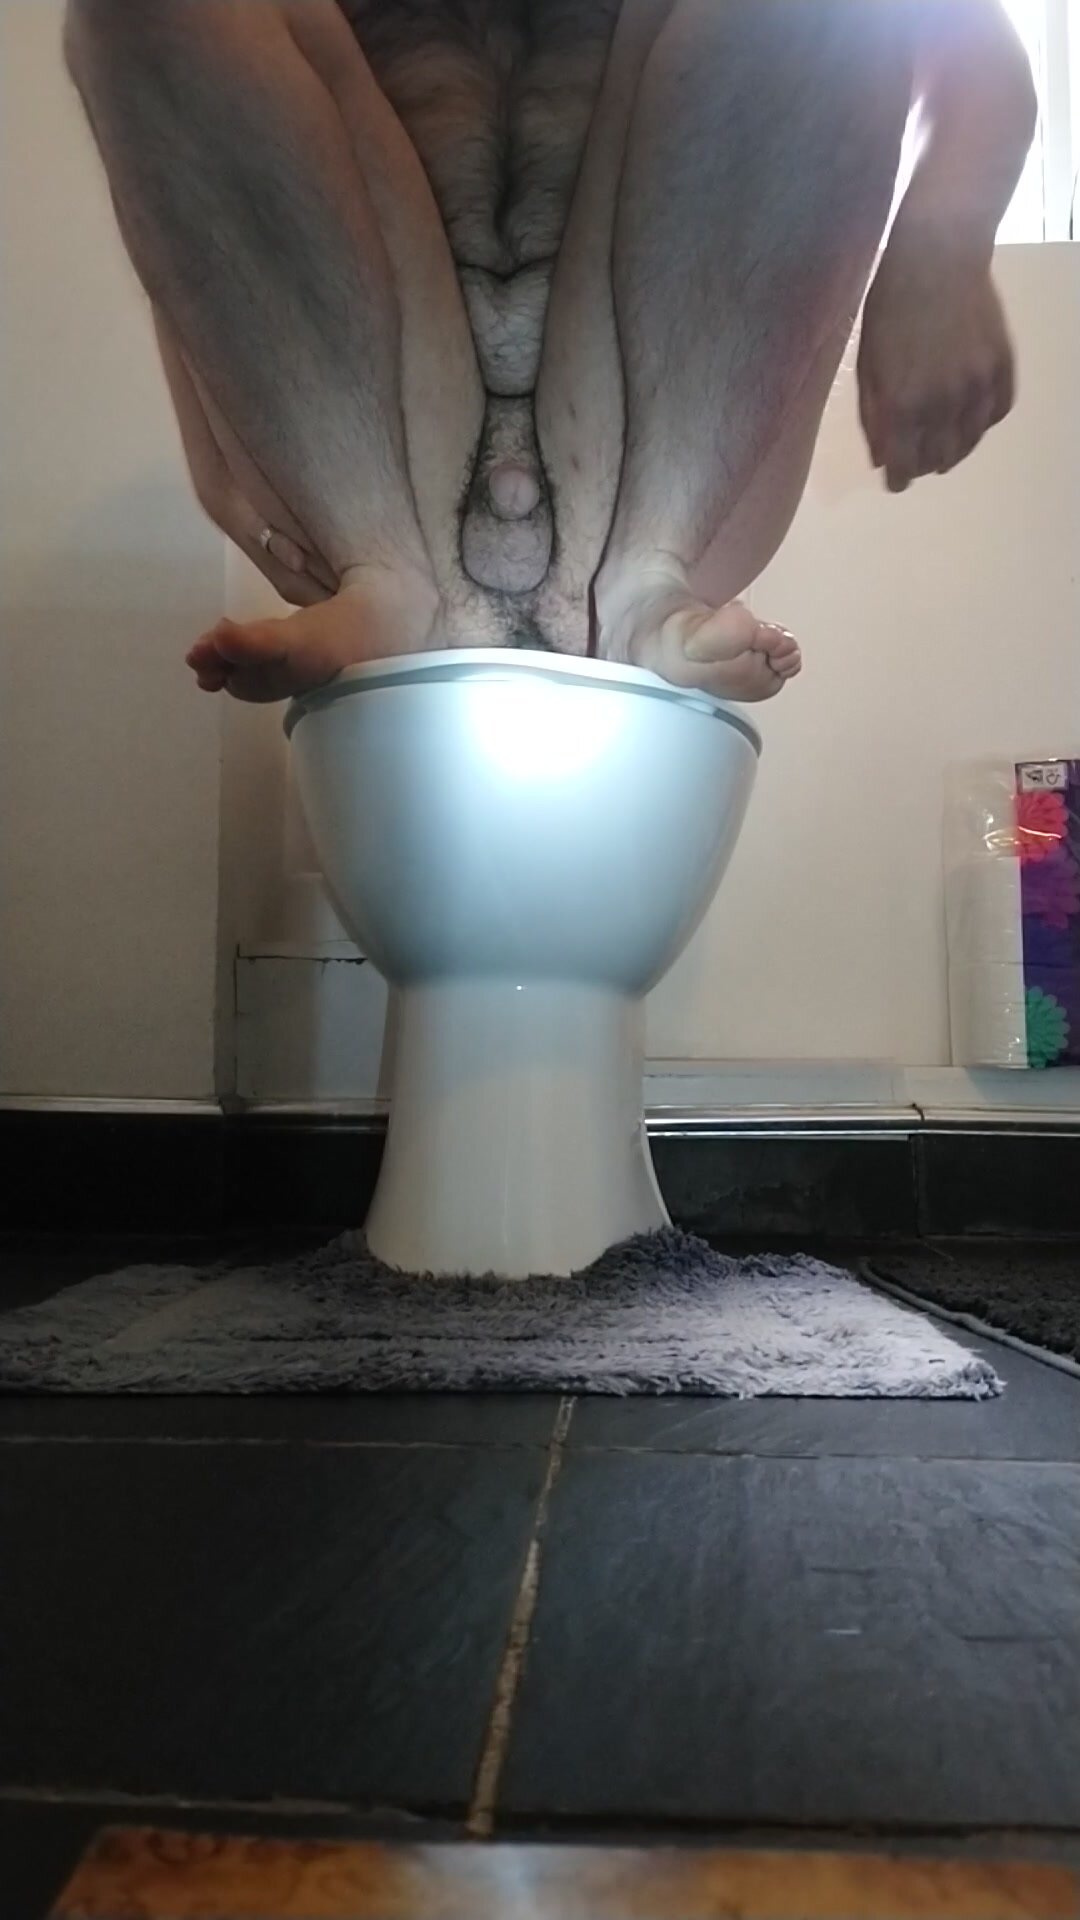 Hairy lad On the toilet with splash noises